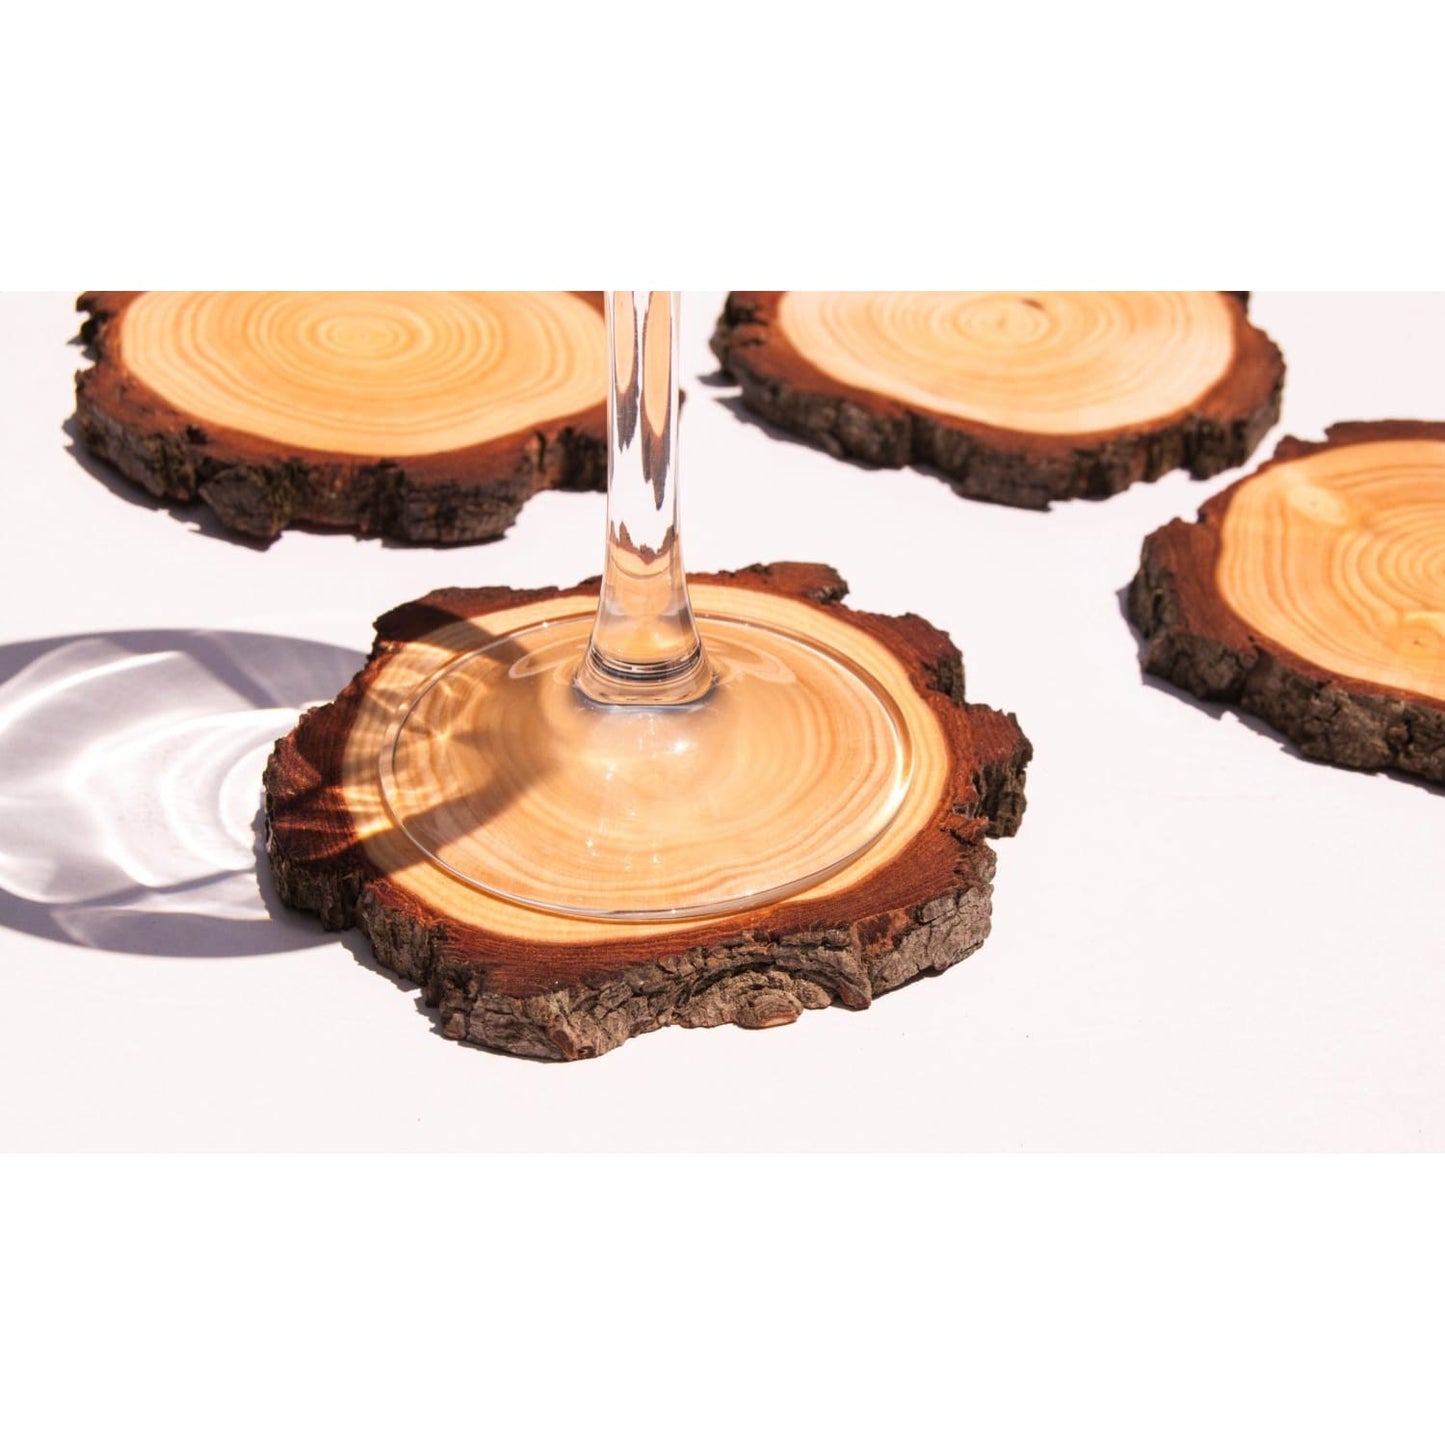 Wood Slice Coasters (4 Pack) - Coasters